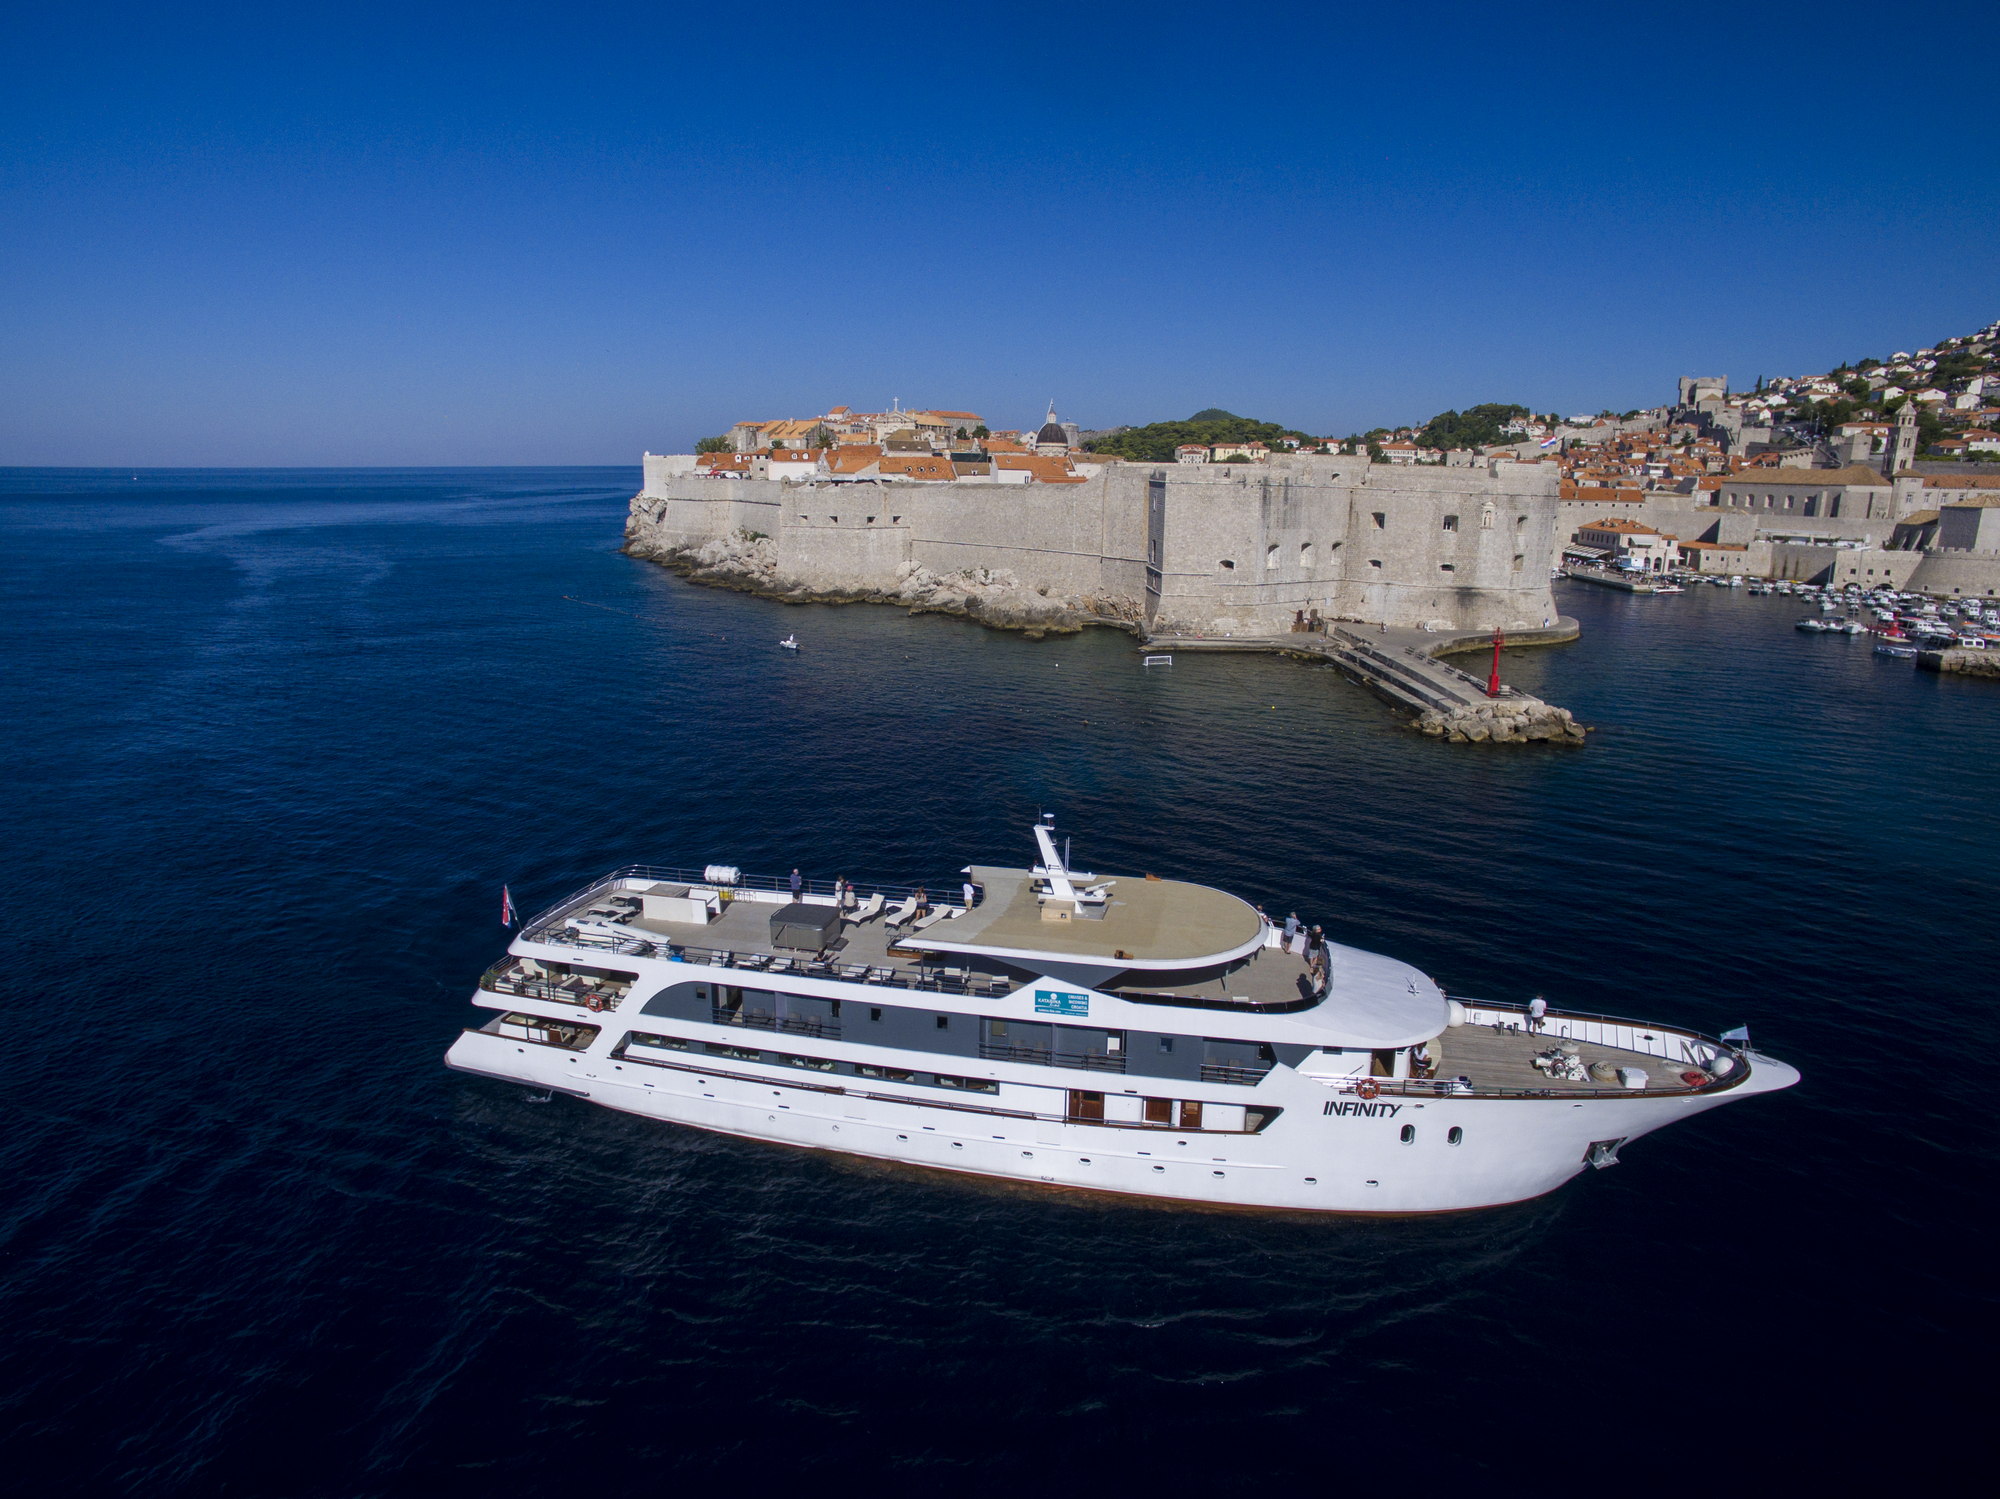 croatia yachting review